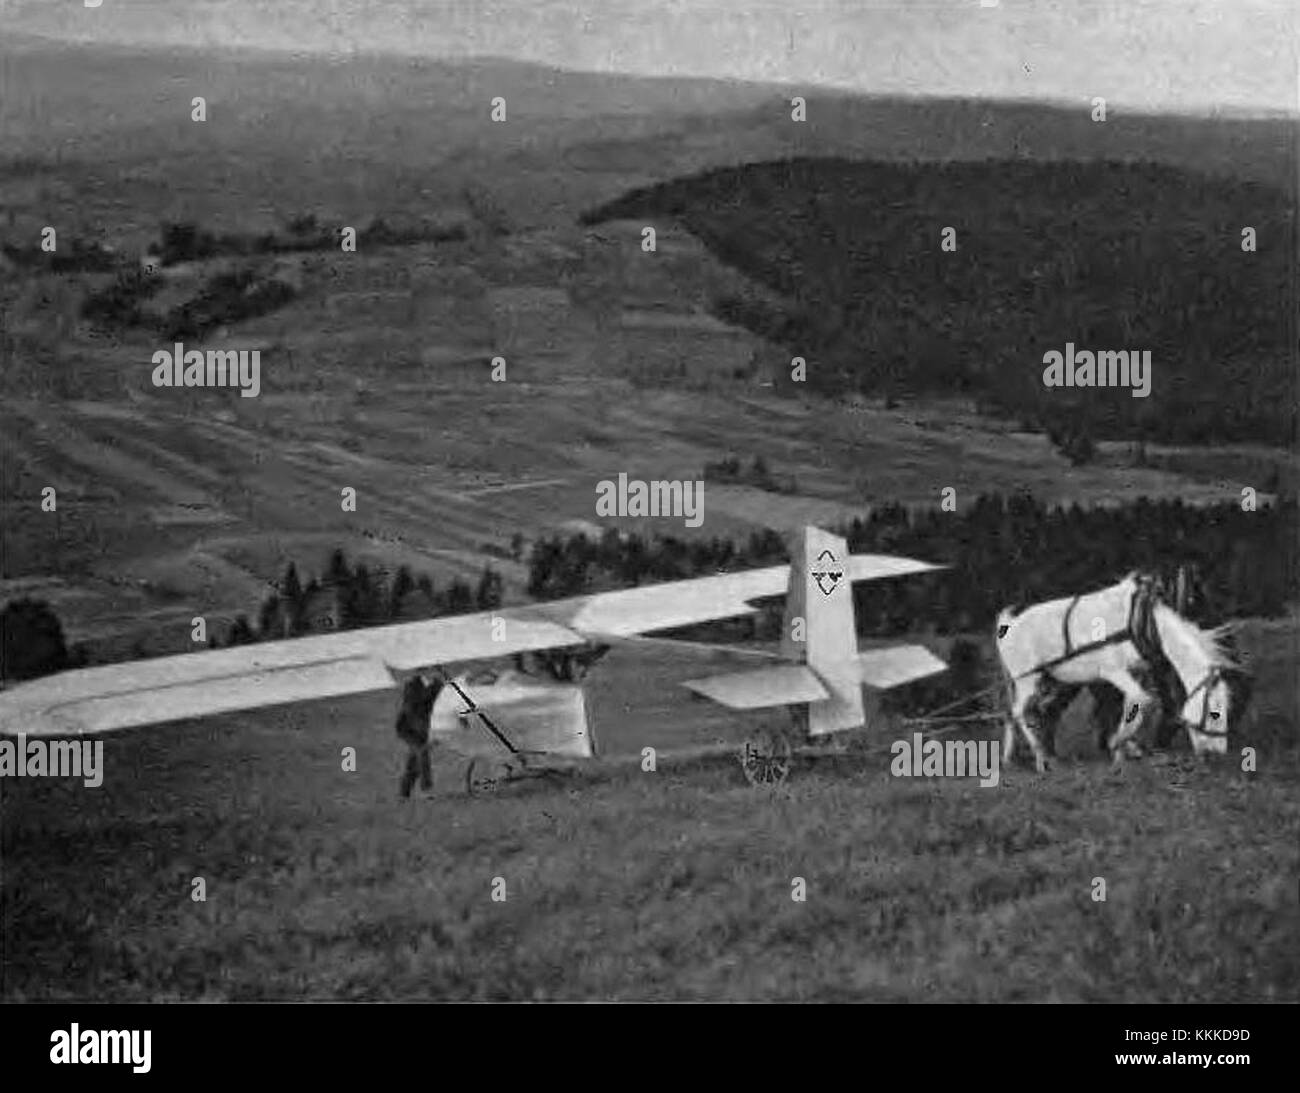 Bezmiechowa landing field (-1939) Stock Photo